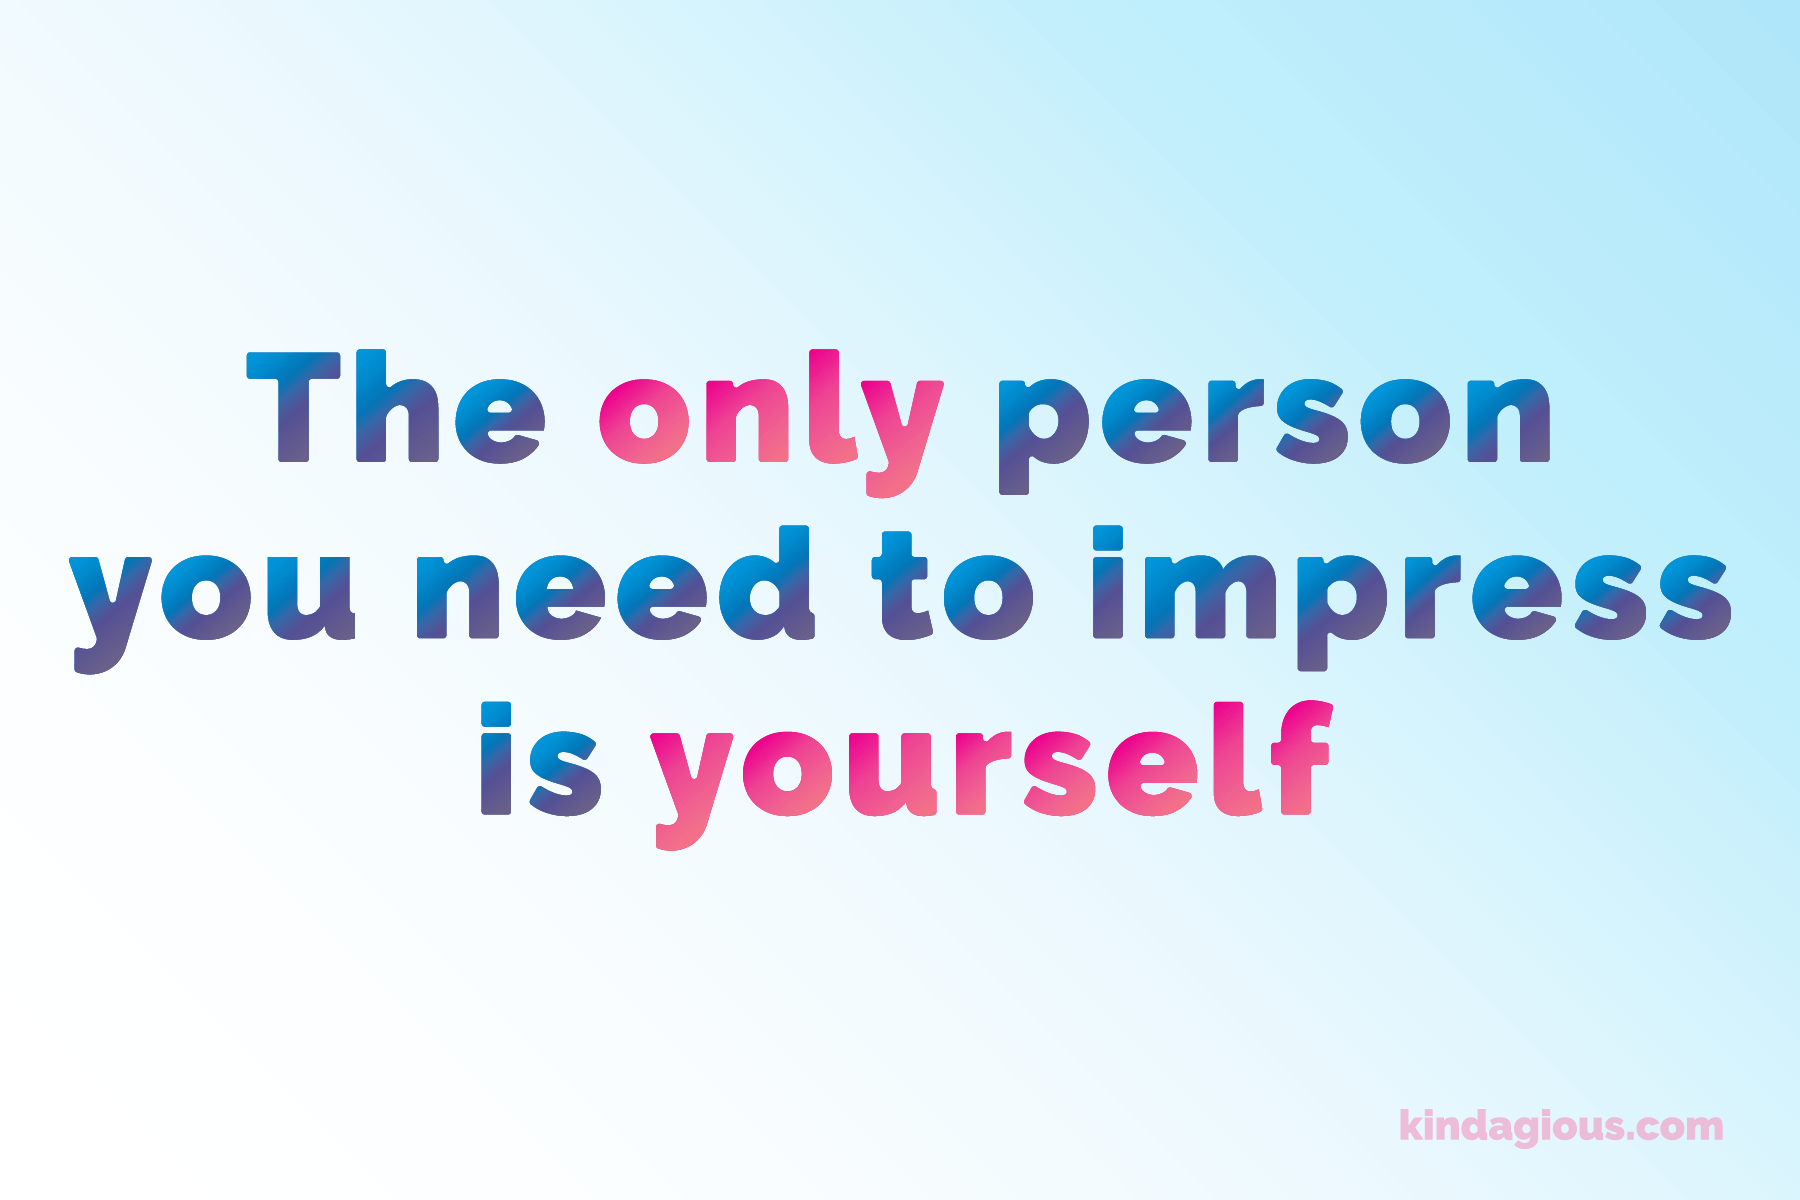 Impress yourself!